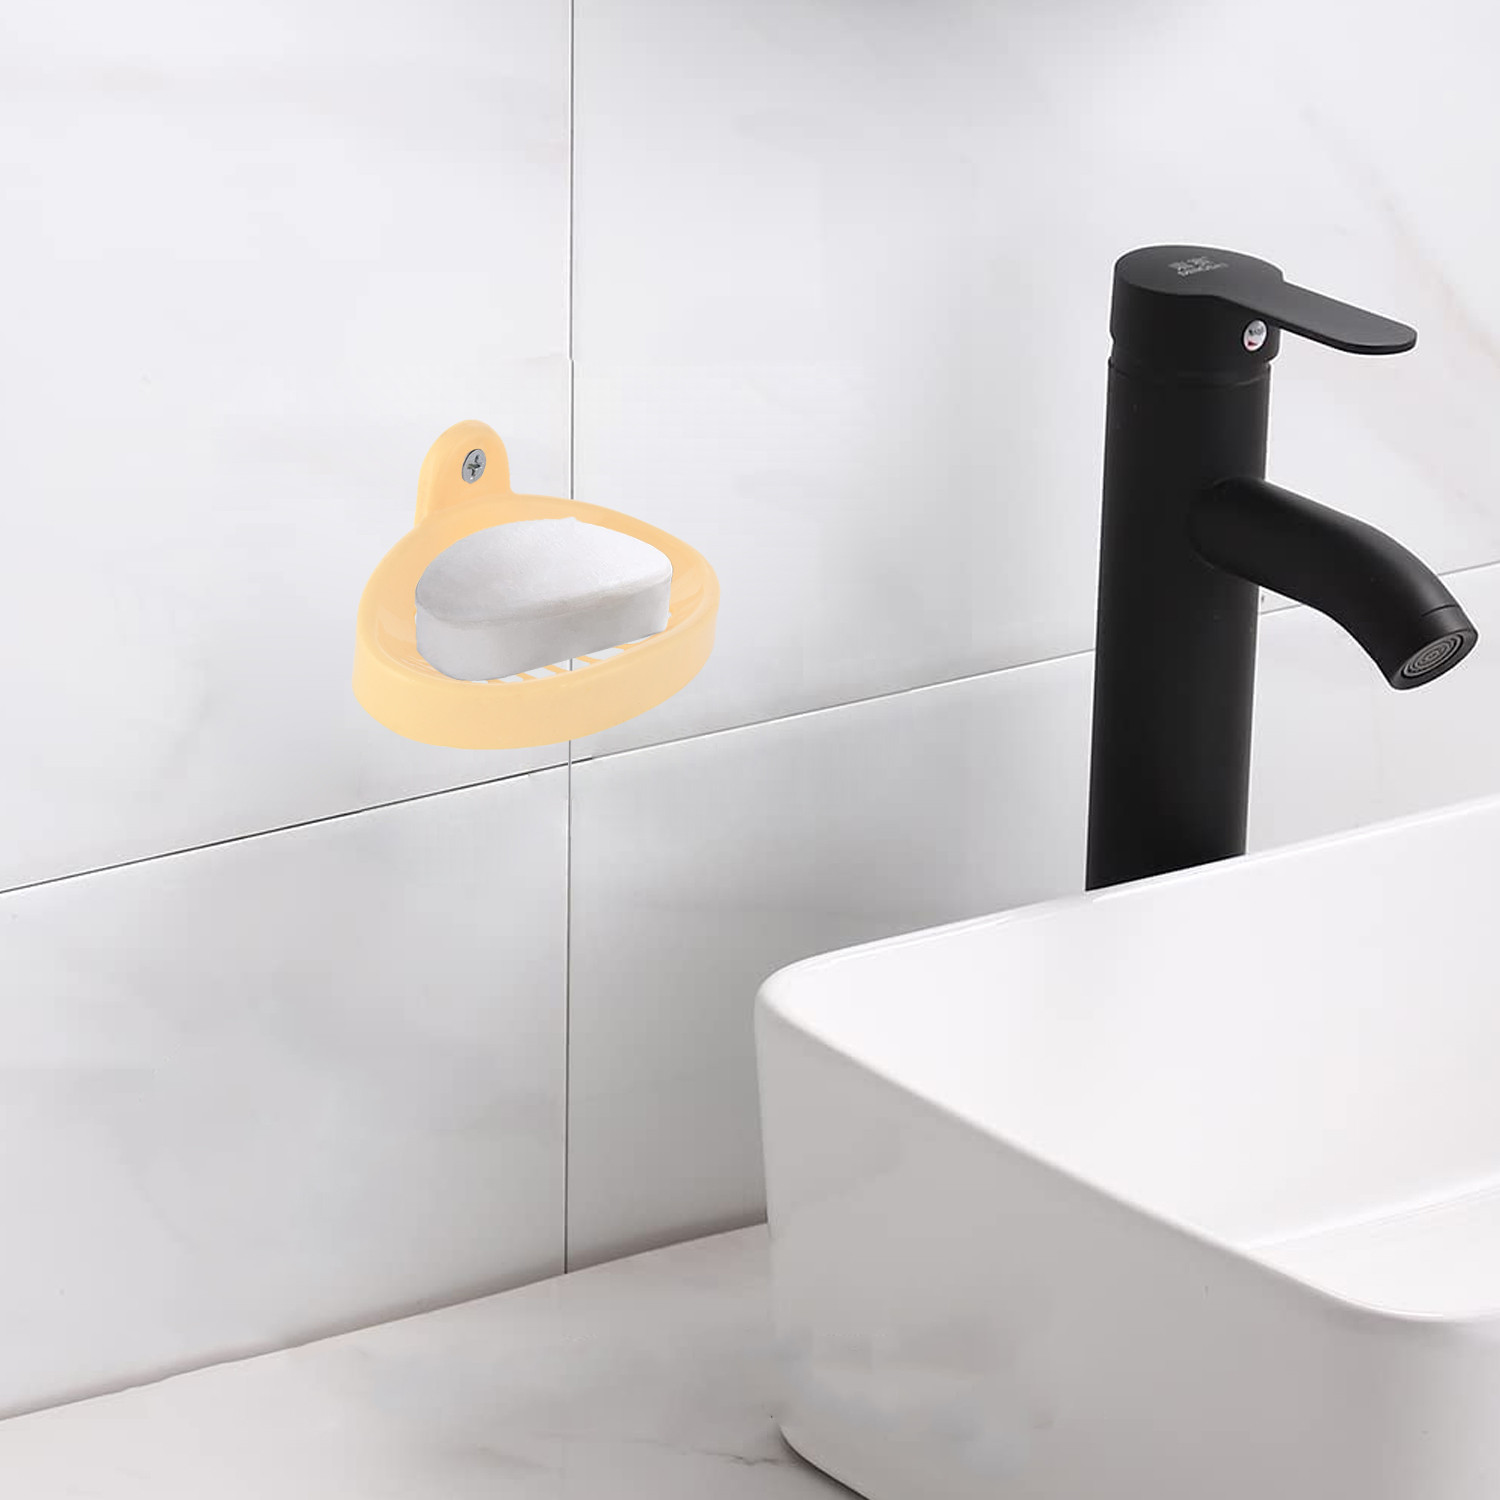 Kuber Industries Soap Holder|Sink Soap Holder|Plastic wall Mounted Soap Holder|Oval Shape Self Draining Soap Dish for Bathroom|(Cream)